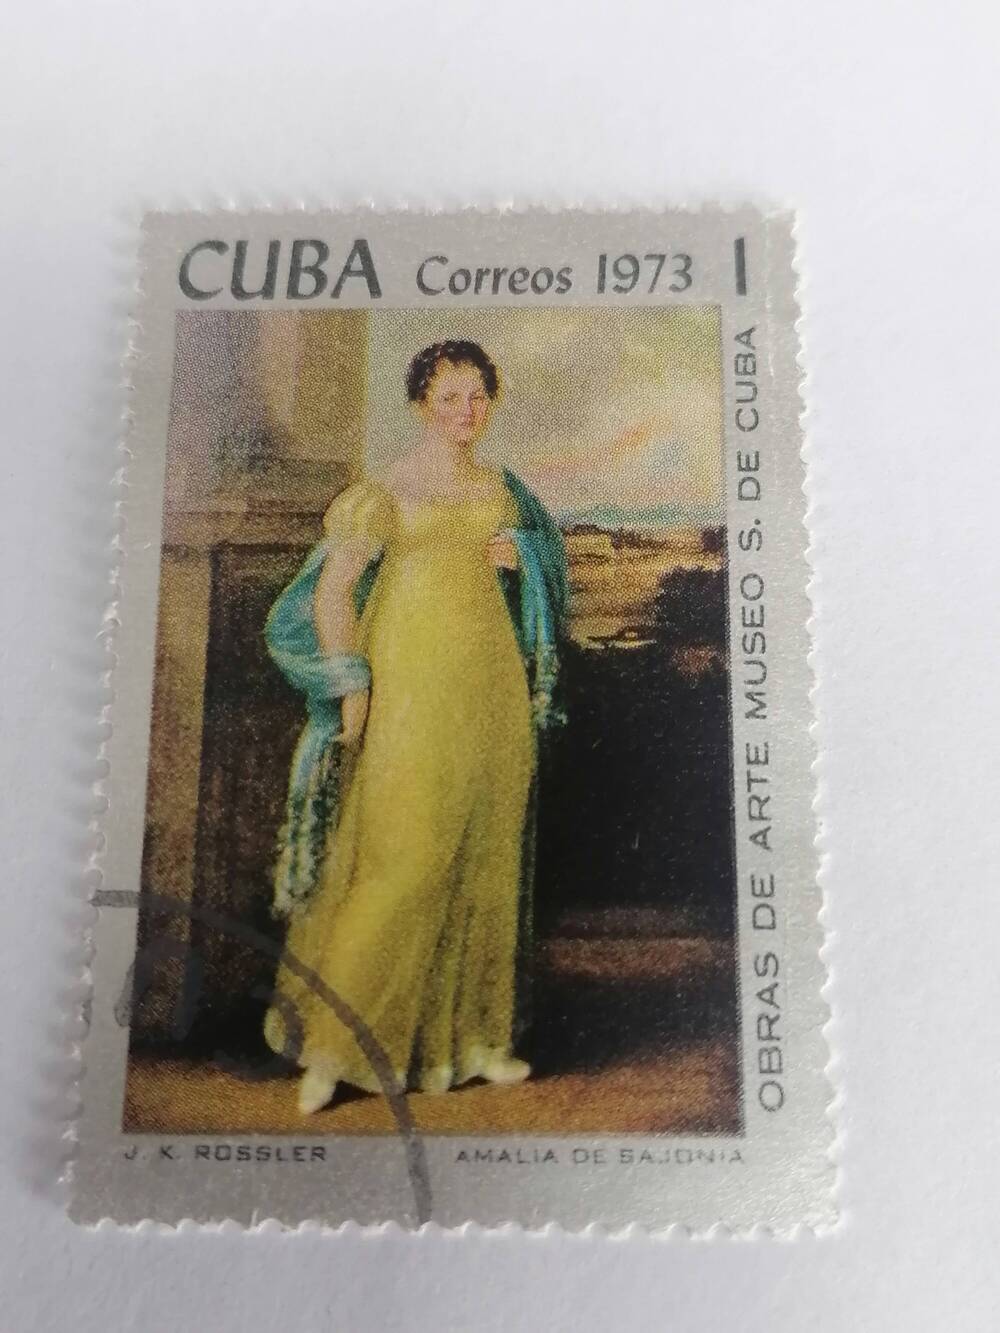 Марка почтовая гашеная, Cuba Correos,Куба,1973 г,Obras de arte muzeo s. de Cuba J.K.Rossler malia de Sajonia